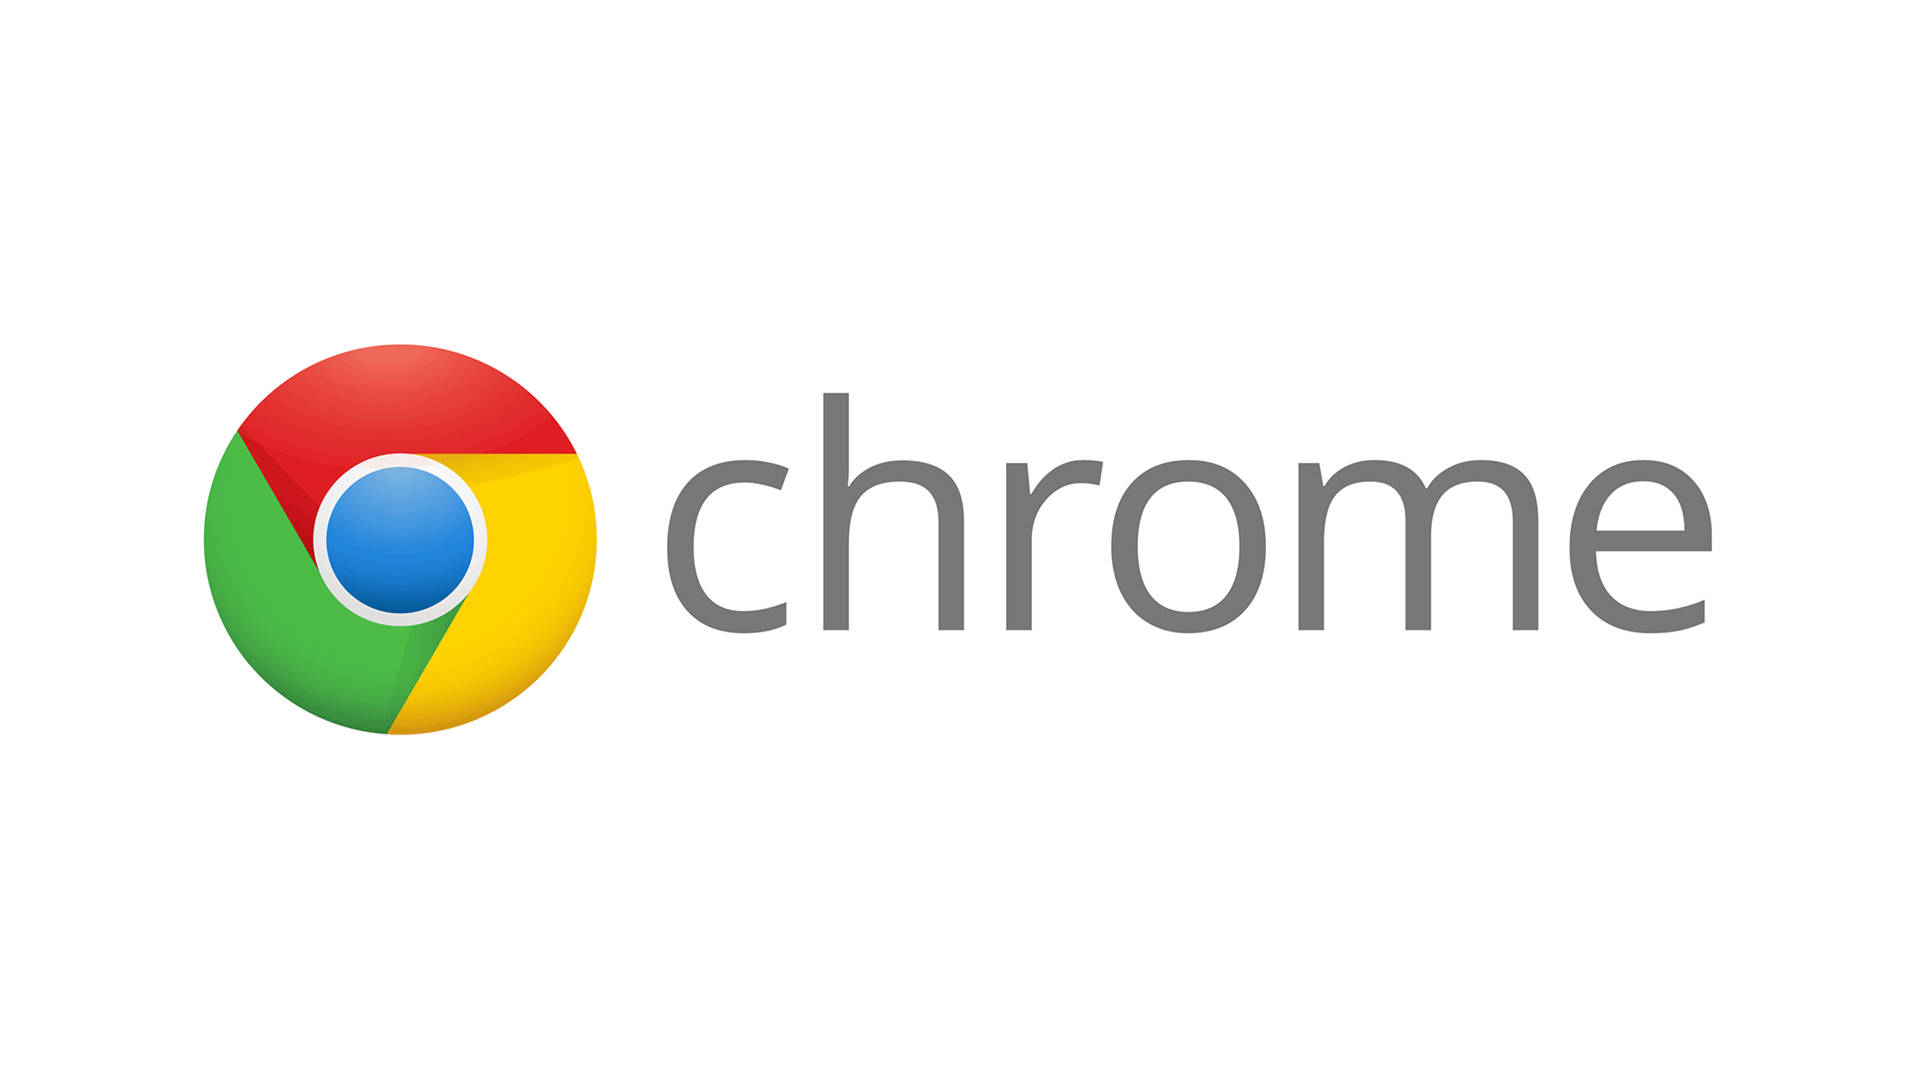 Google Chrome Aesthetic Background